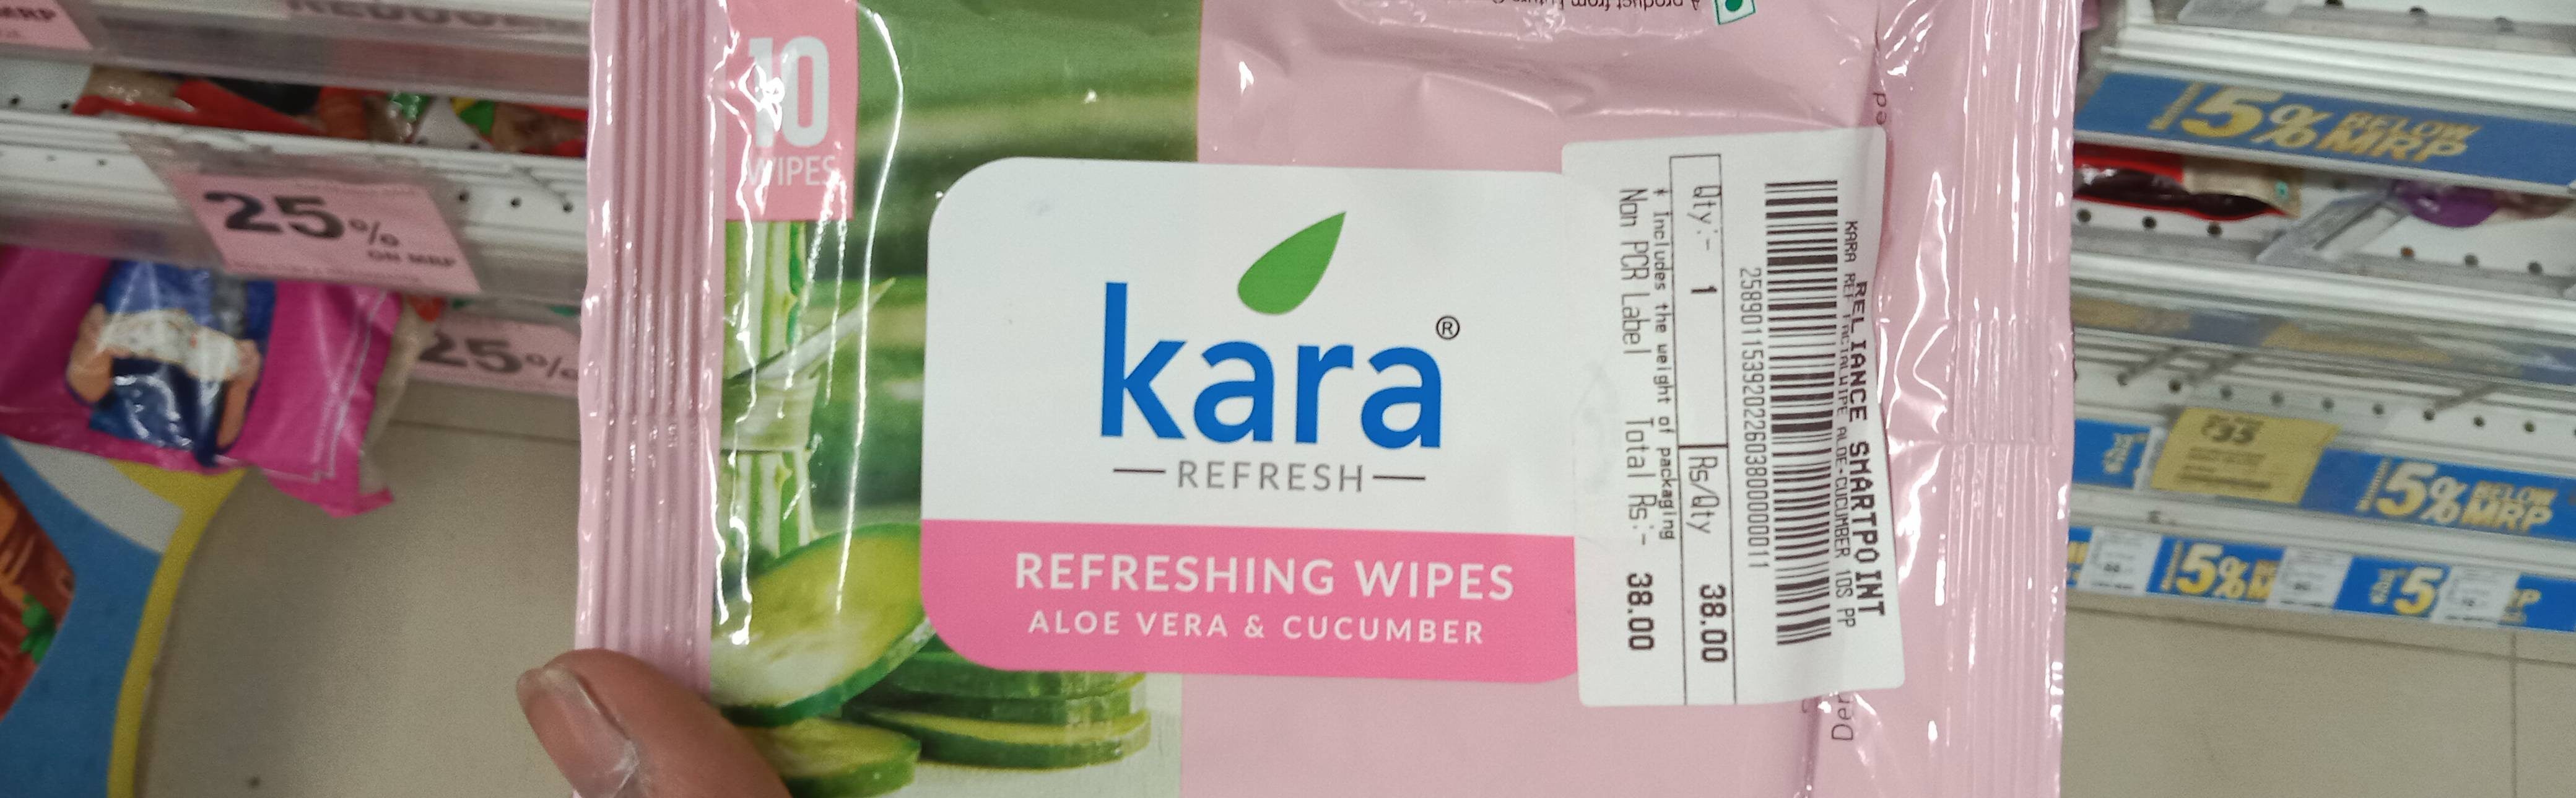 Kara Aloe vera & Cucumber Wipes - Produkt - en